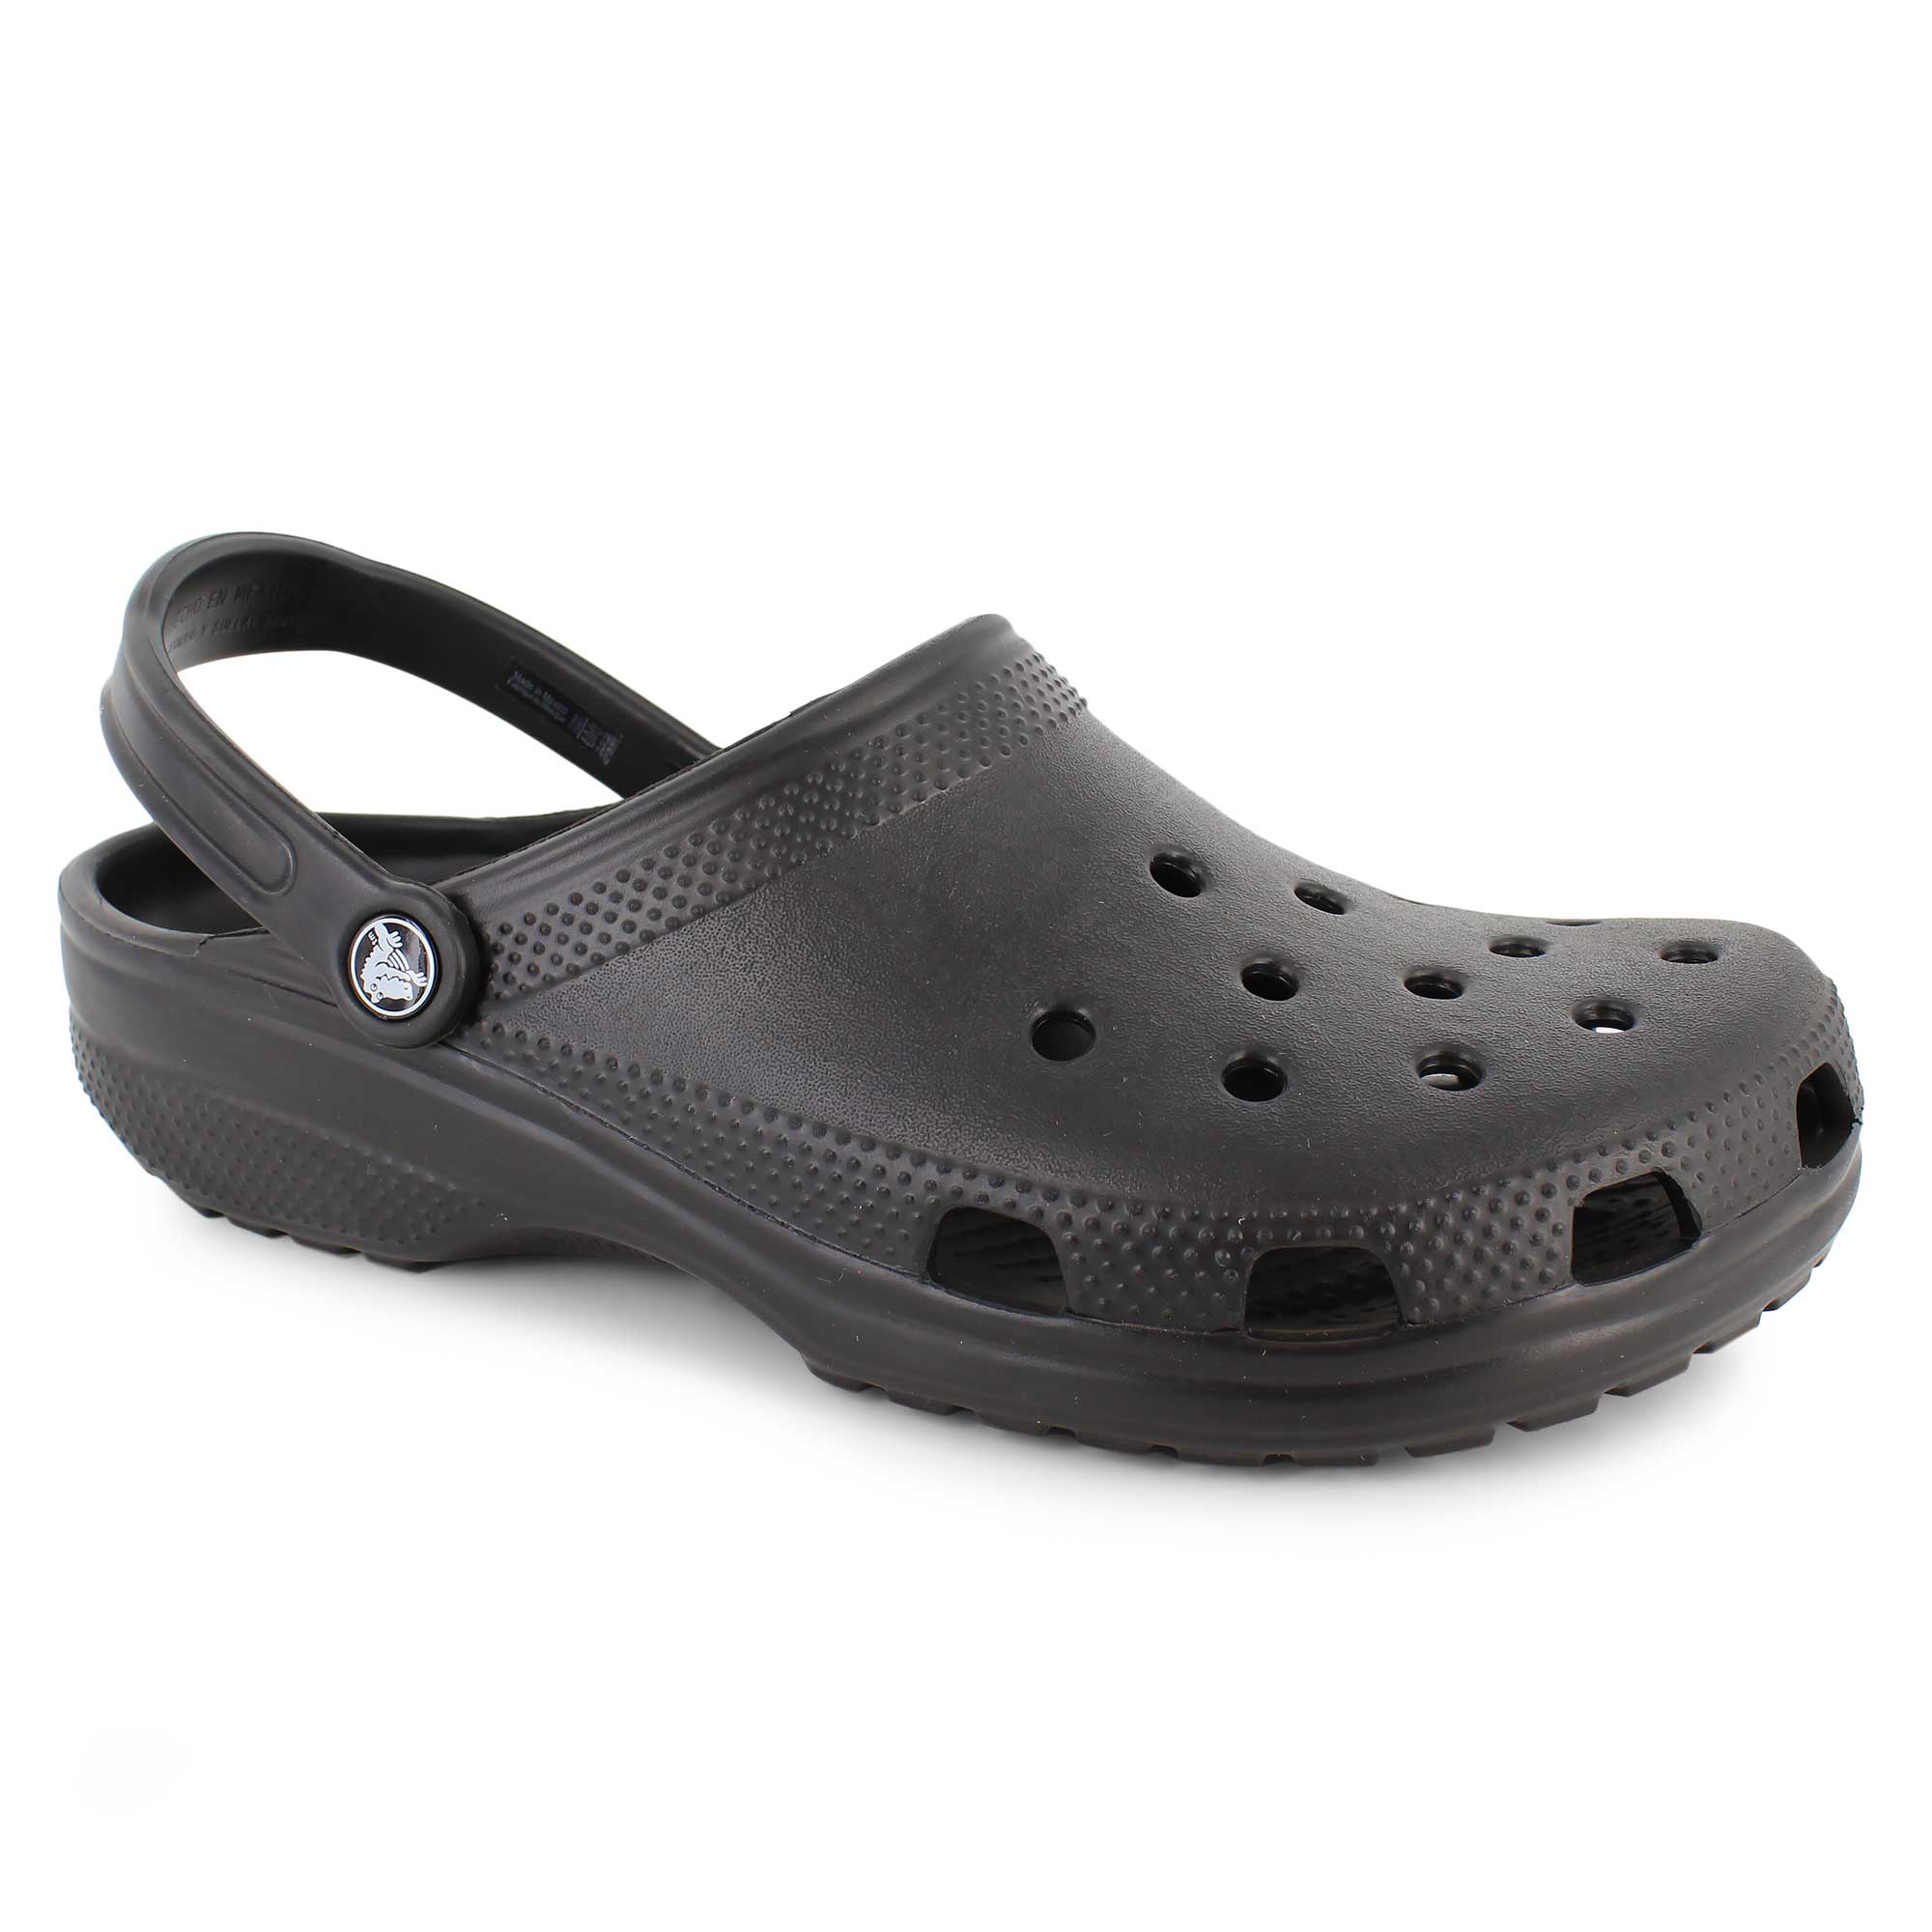 crocs shoe show